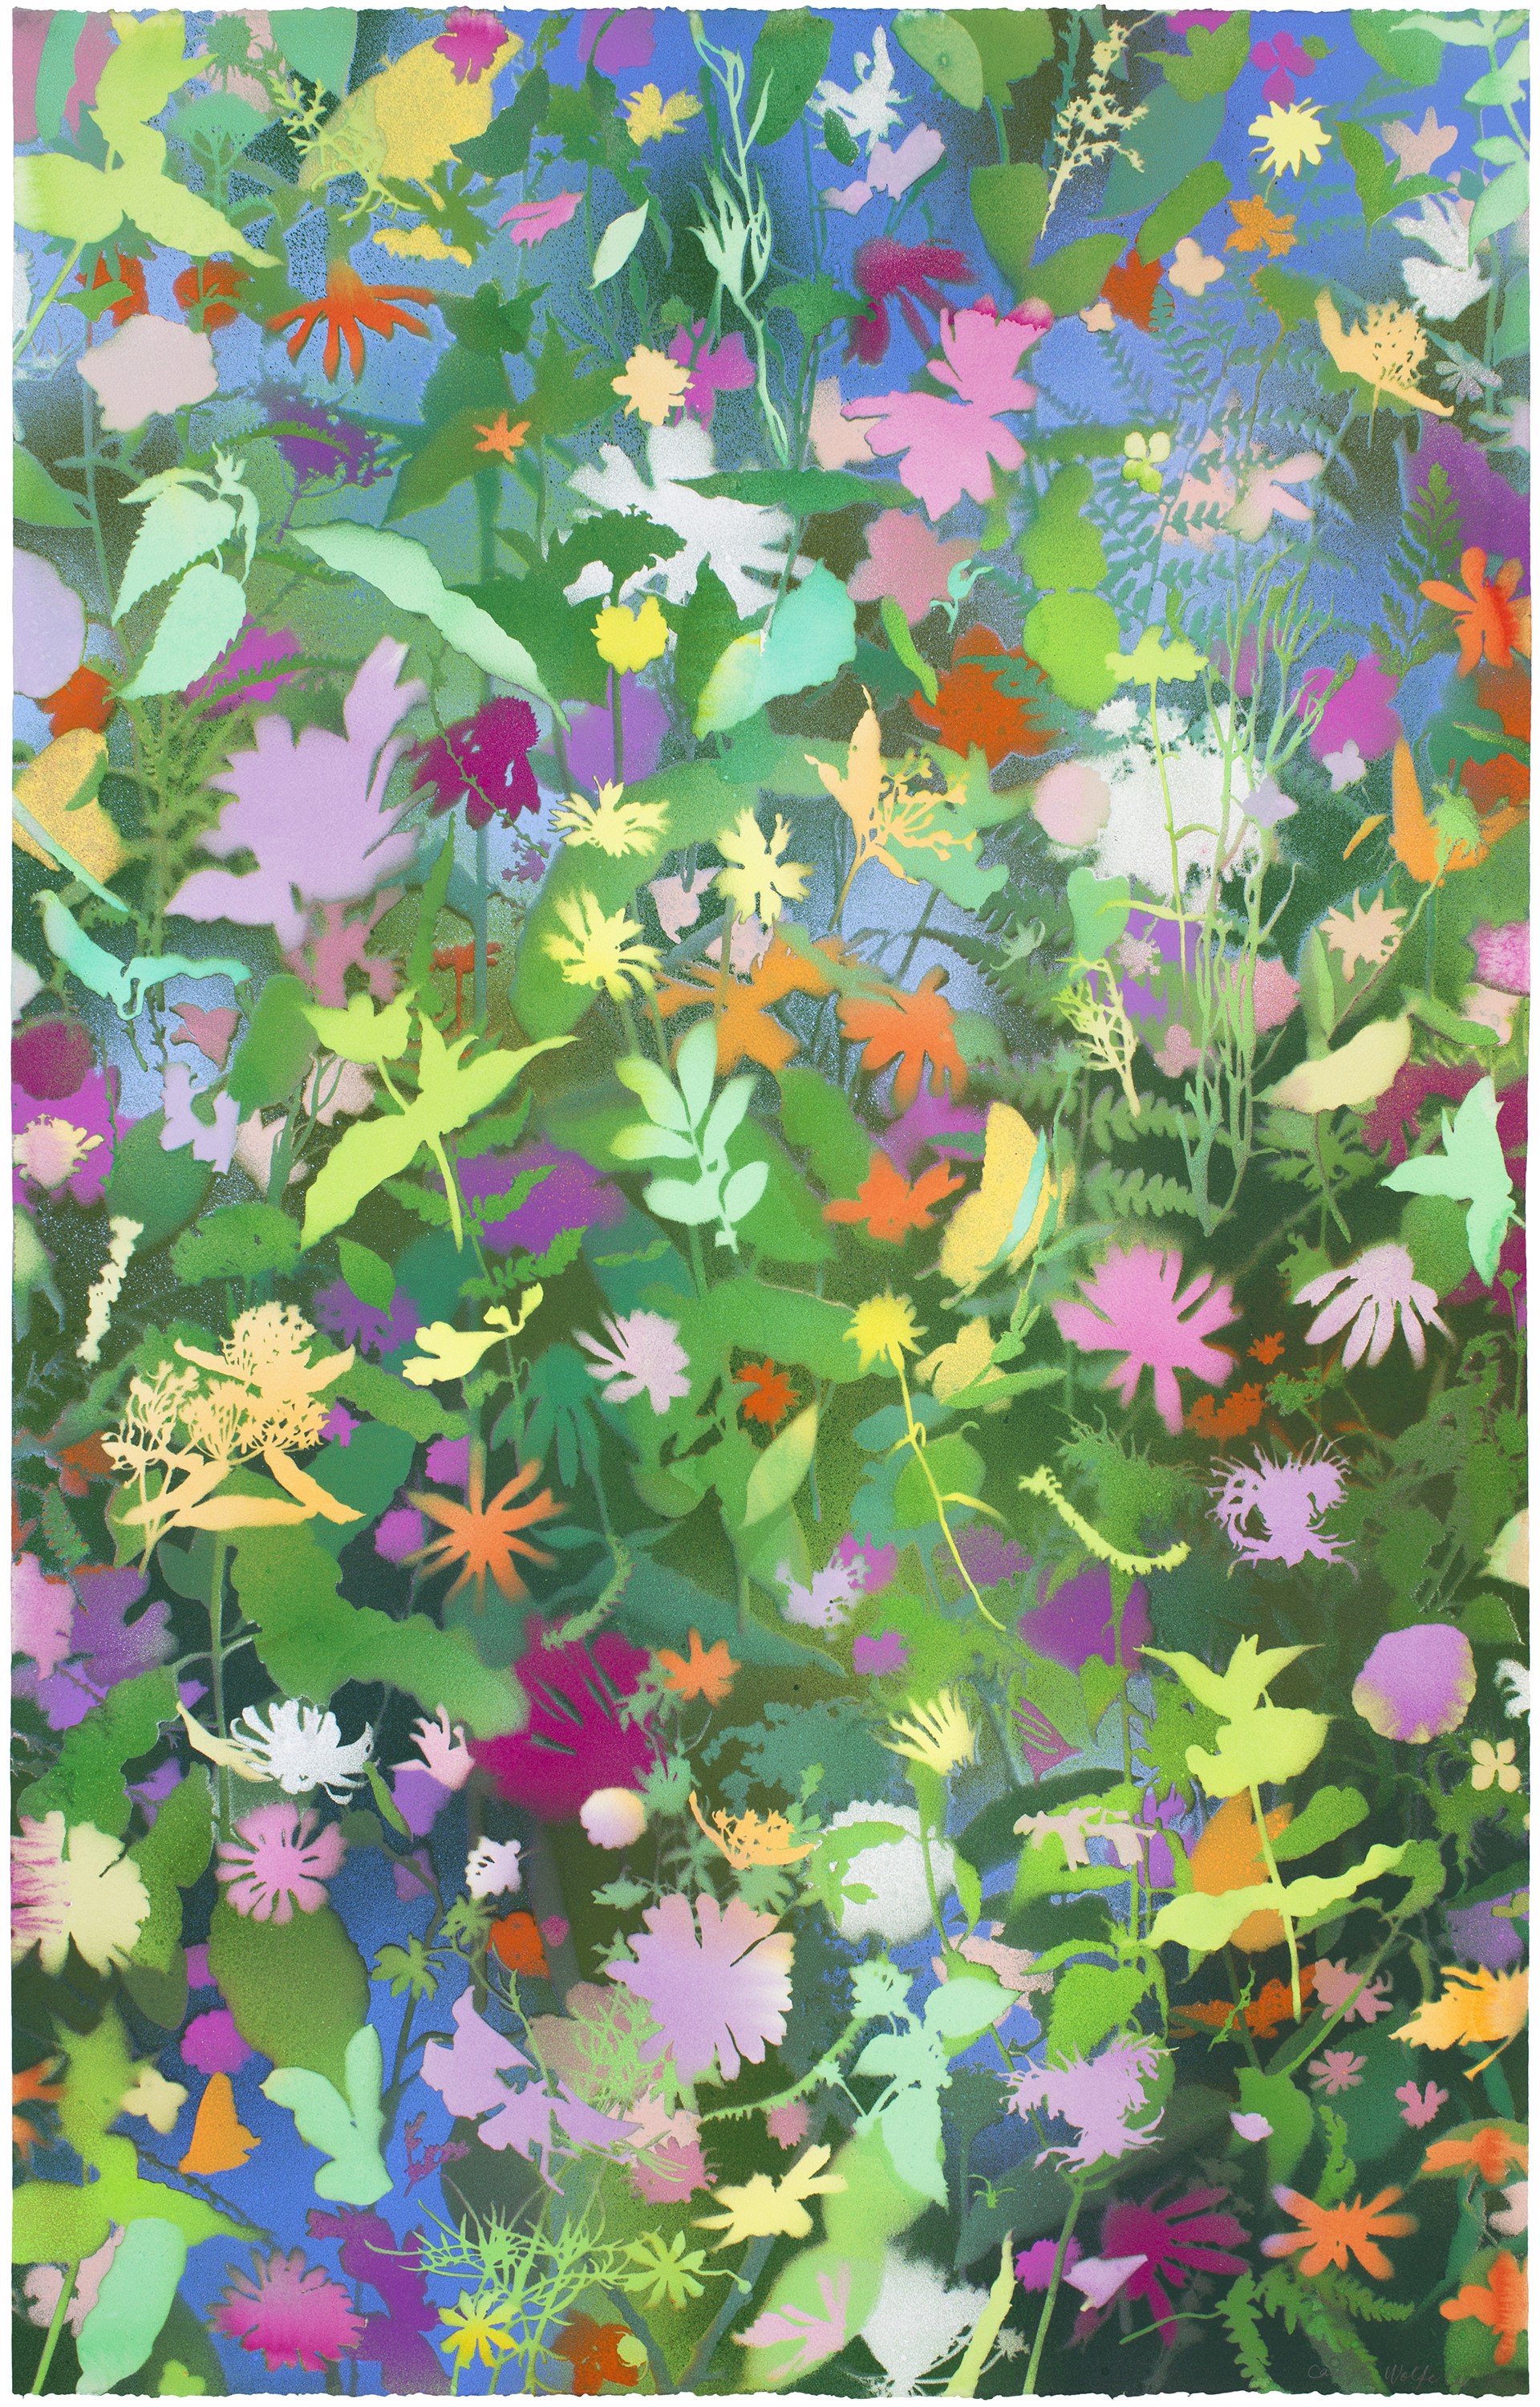 August Wildflowers II by Carlyle Wolfe Lee